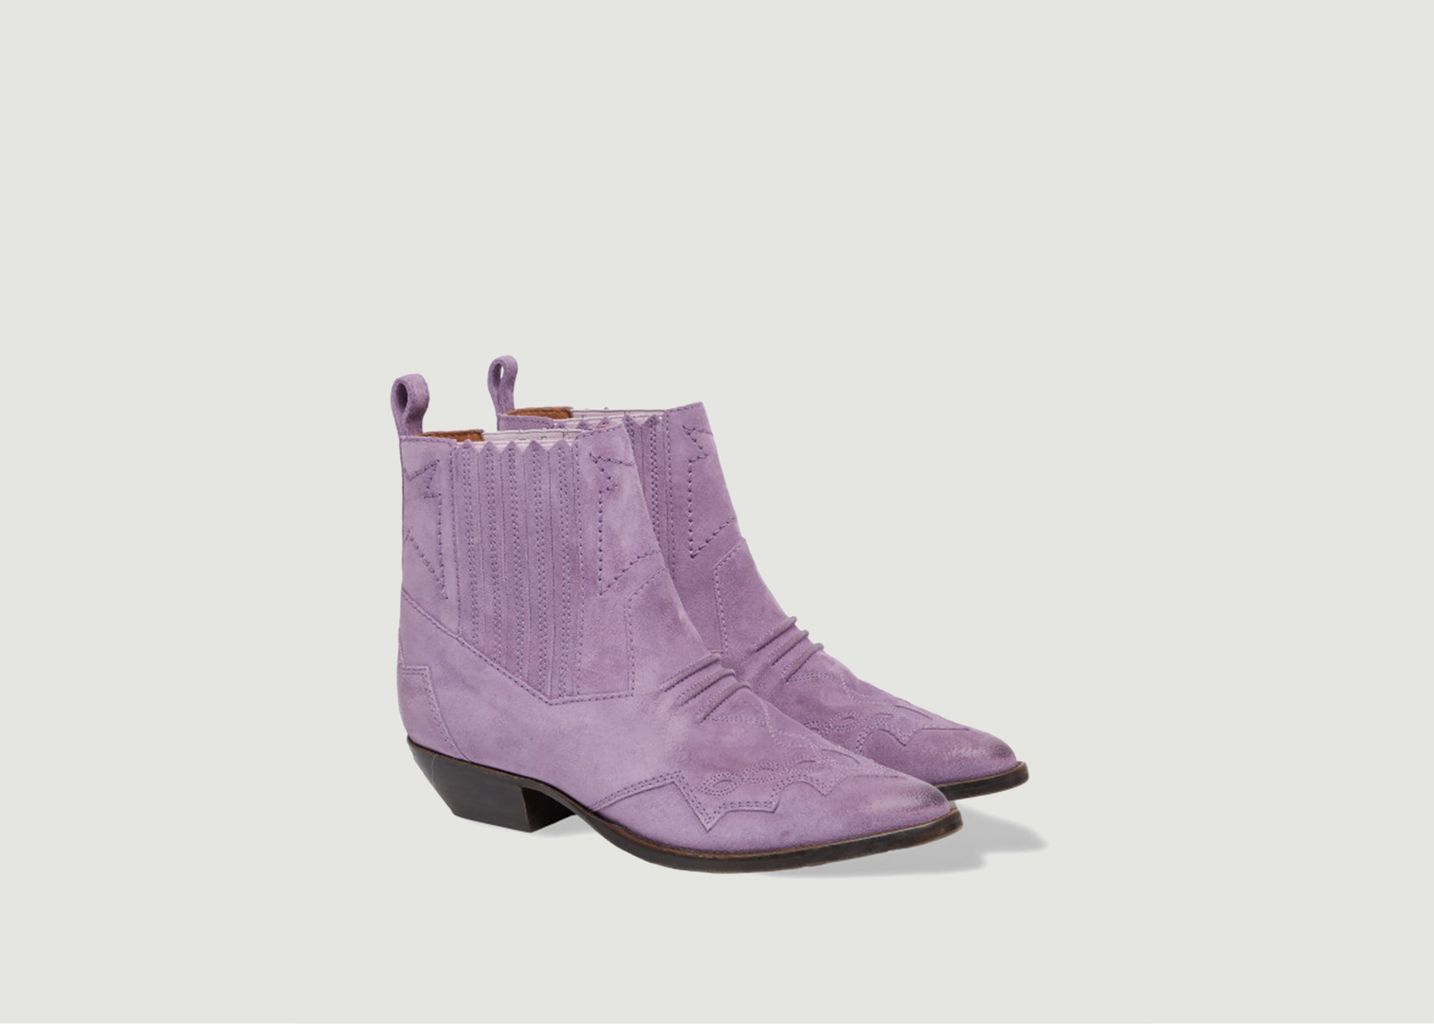 Tucson leather boots - Roseanna